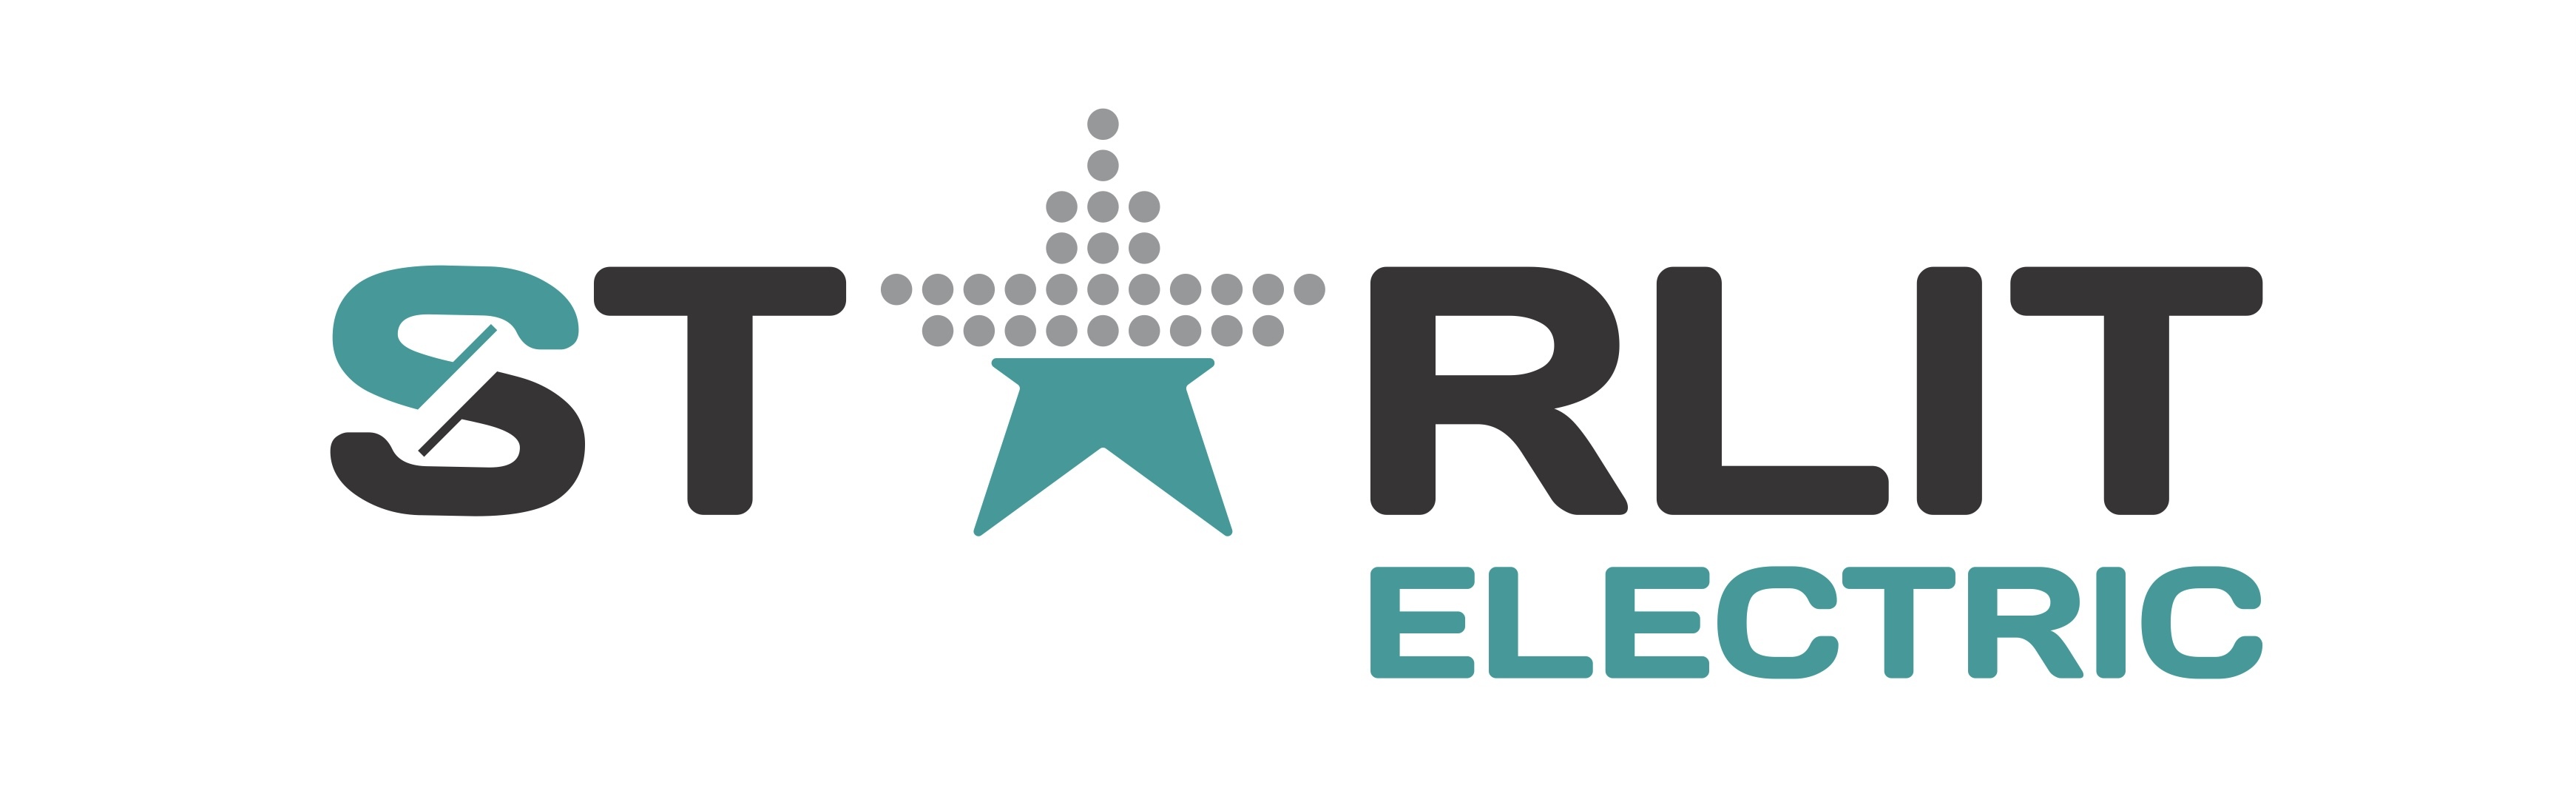 Starlit Electric LTD's logo